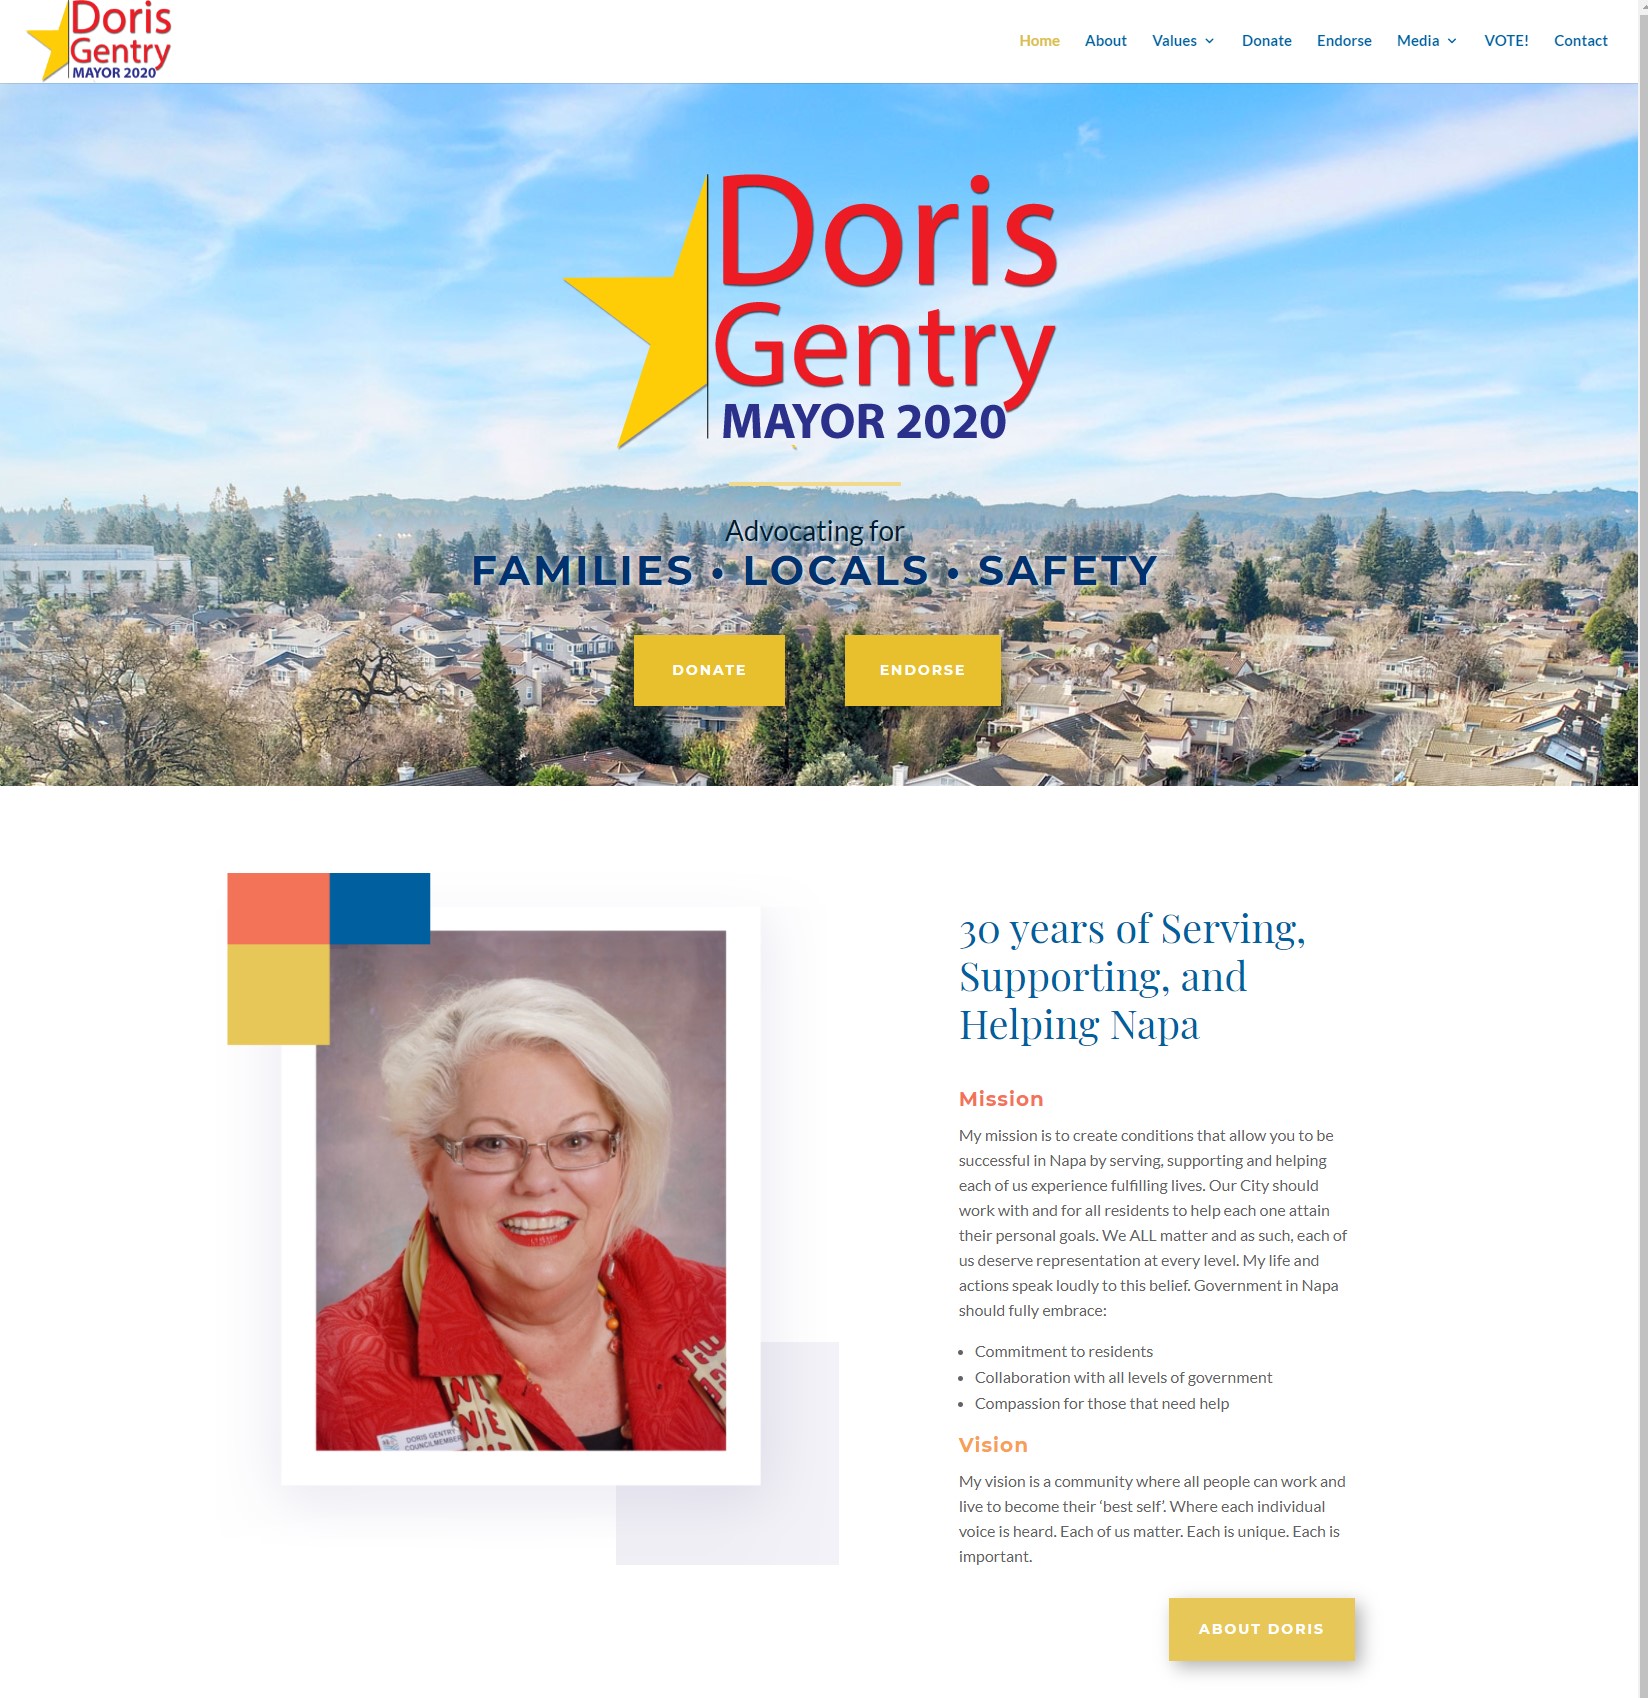 Doris Gentry image